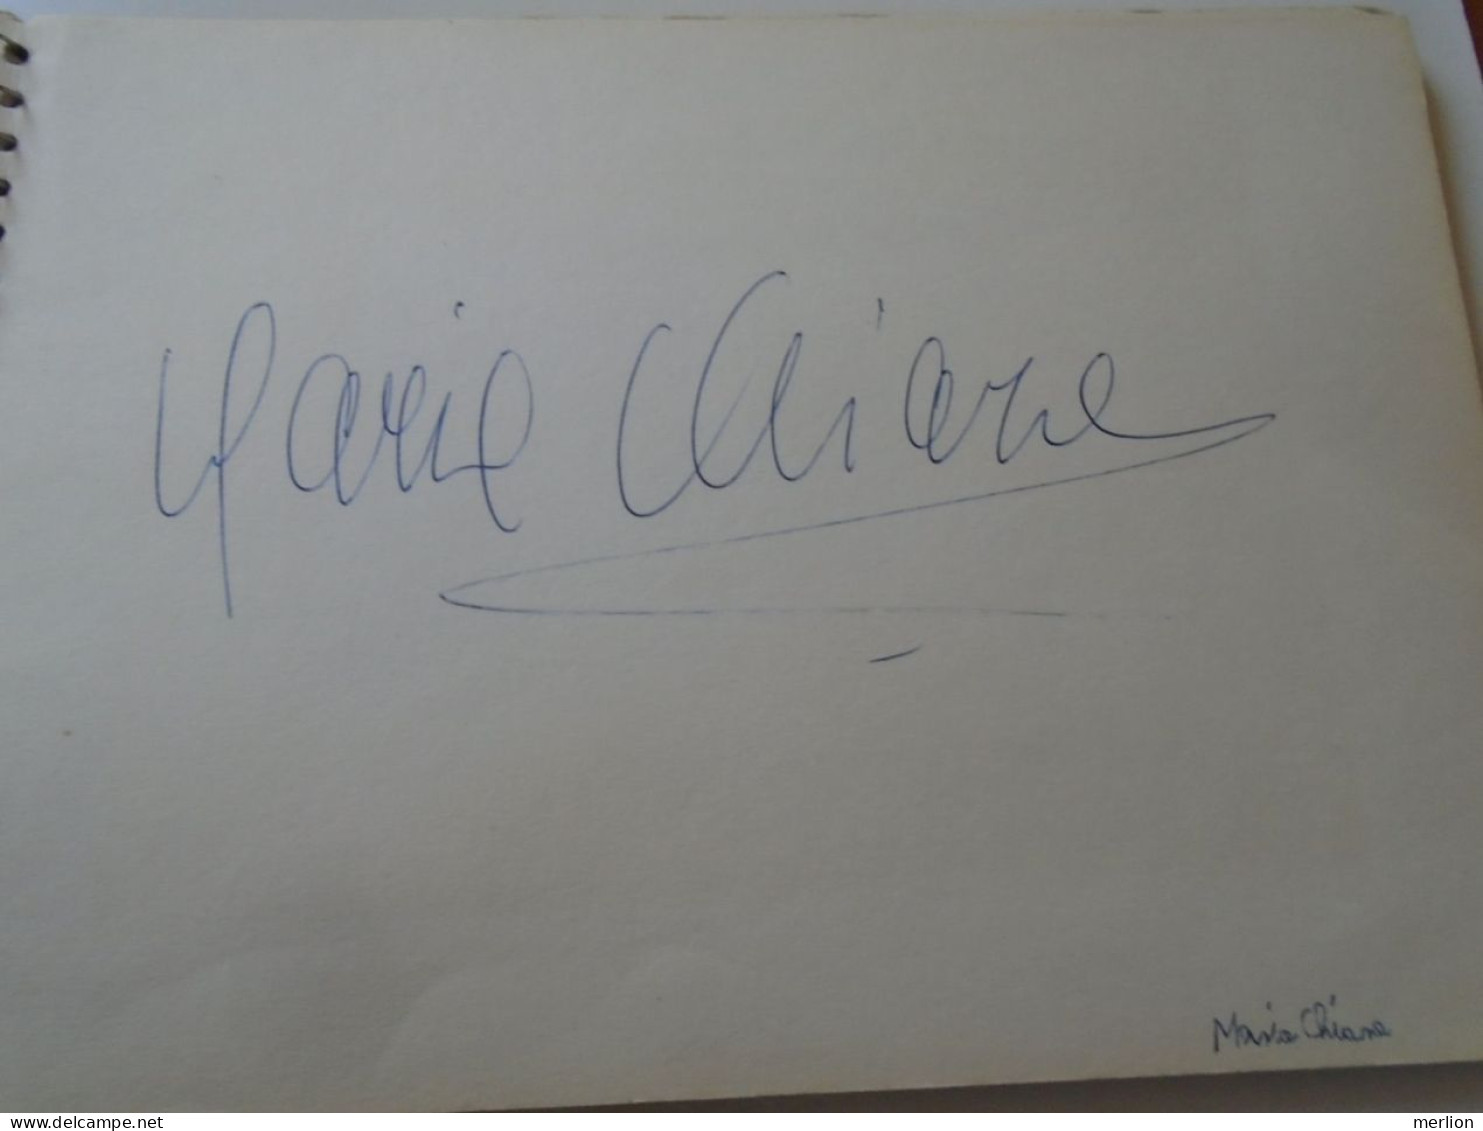 D203334  Signature -Autograph  - Maria Chiara  - Italia  Opera  -Soprano  1981 - Singers & Musicians